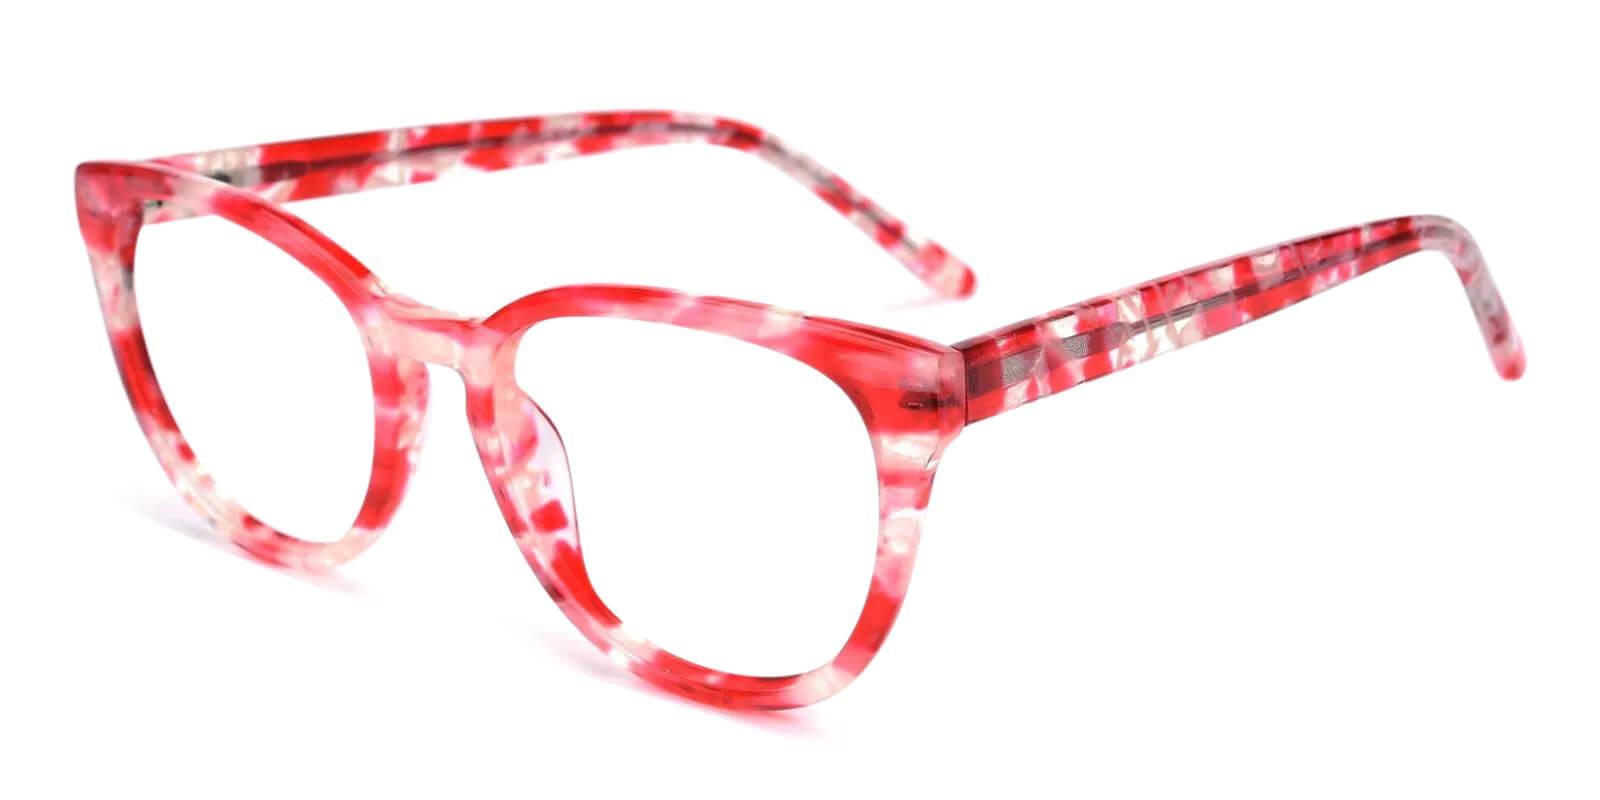 Quauetom Red Acetate Eyeglasses , Fashion , SpringHinges , UniversalBridgeFit Frames from ABBE Glasses